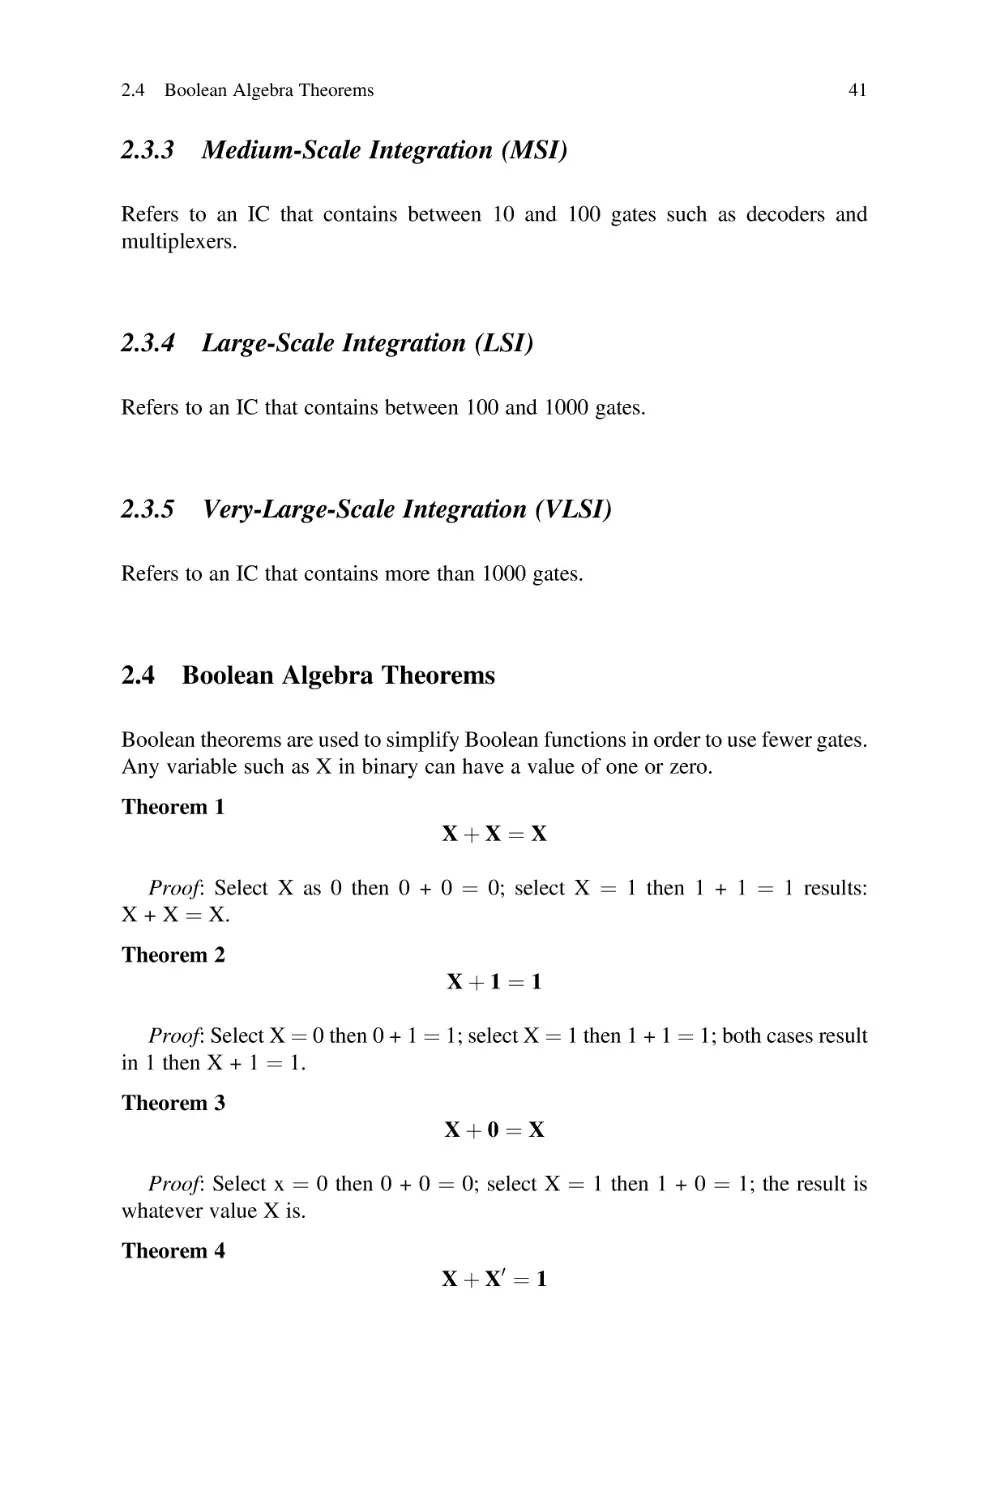 2.3.3 Medium-Scale Integration (MSI)
2.3.4 Large-Scale Integration (LSI)
2.3.5 Very-Large-Scale Integration (VLSI)
2.4 Boolean Algebra Theorems